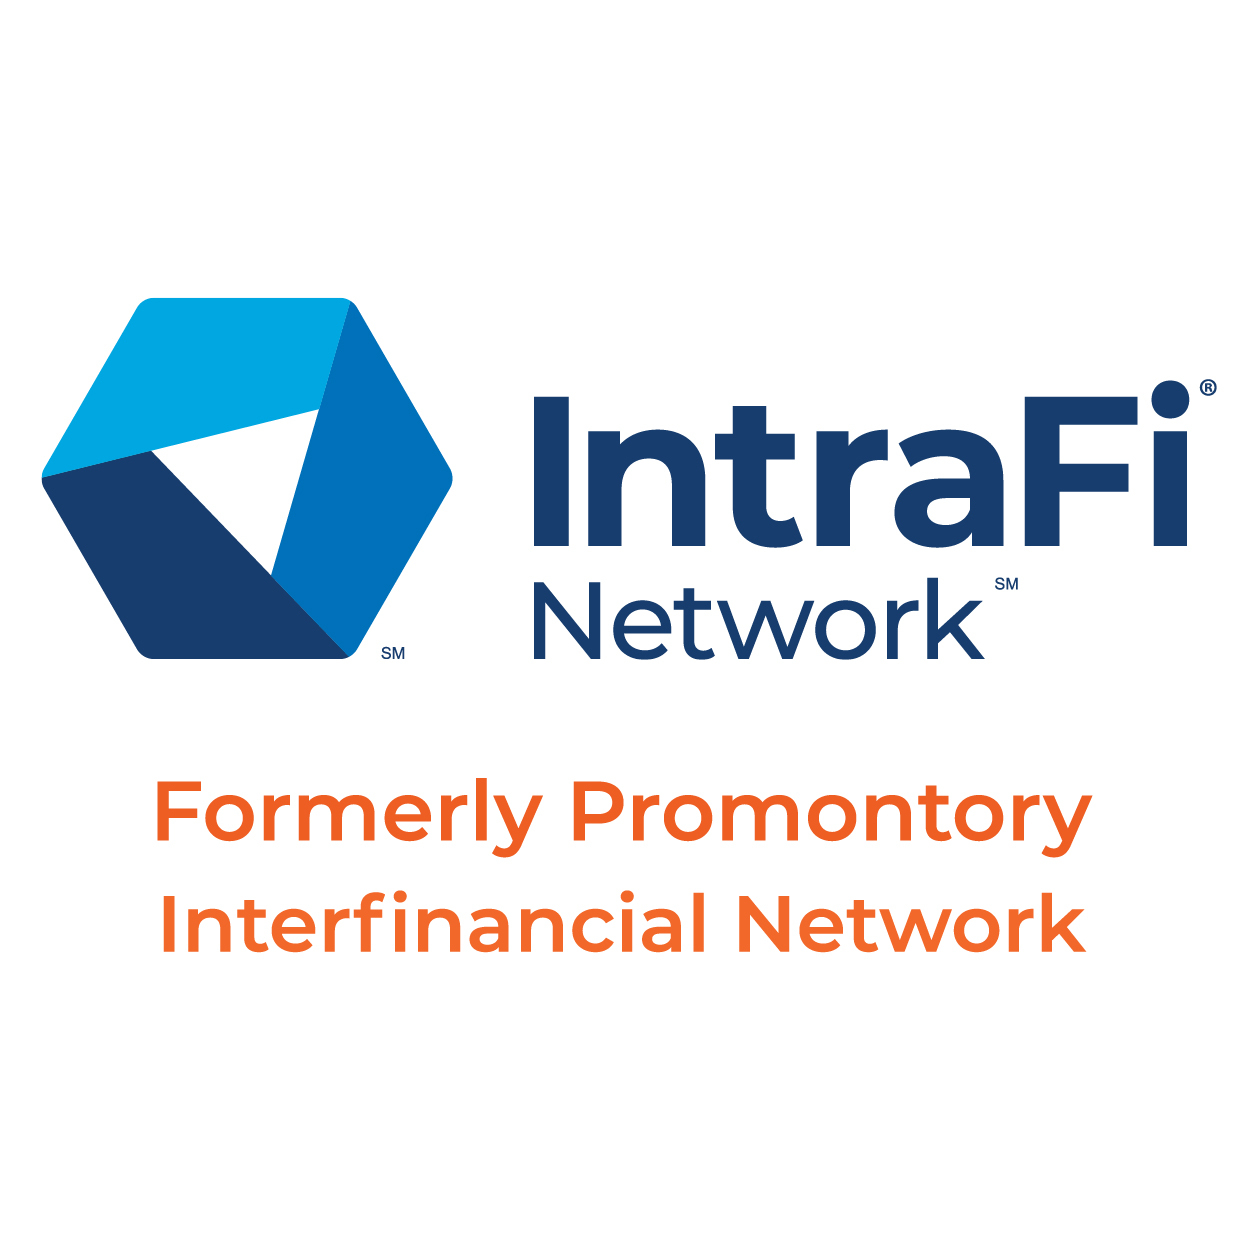 IntraFi Network logo